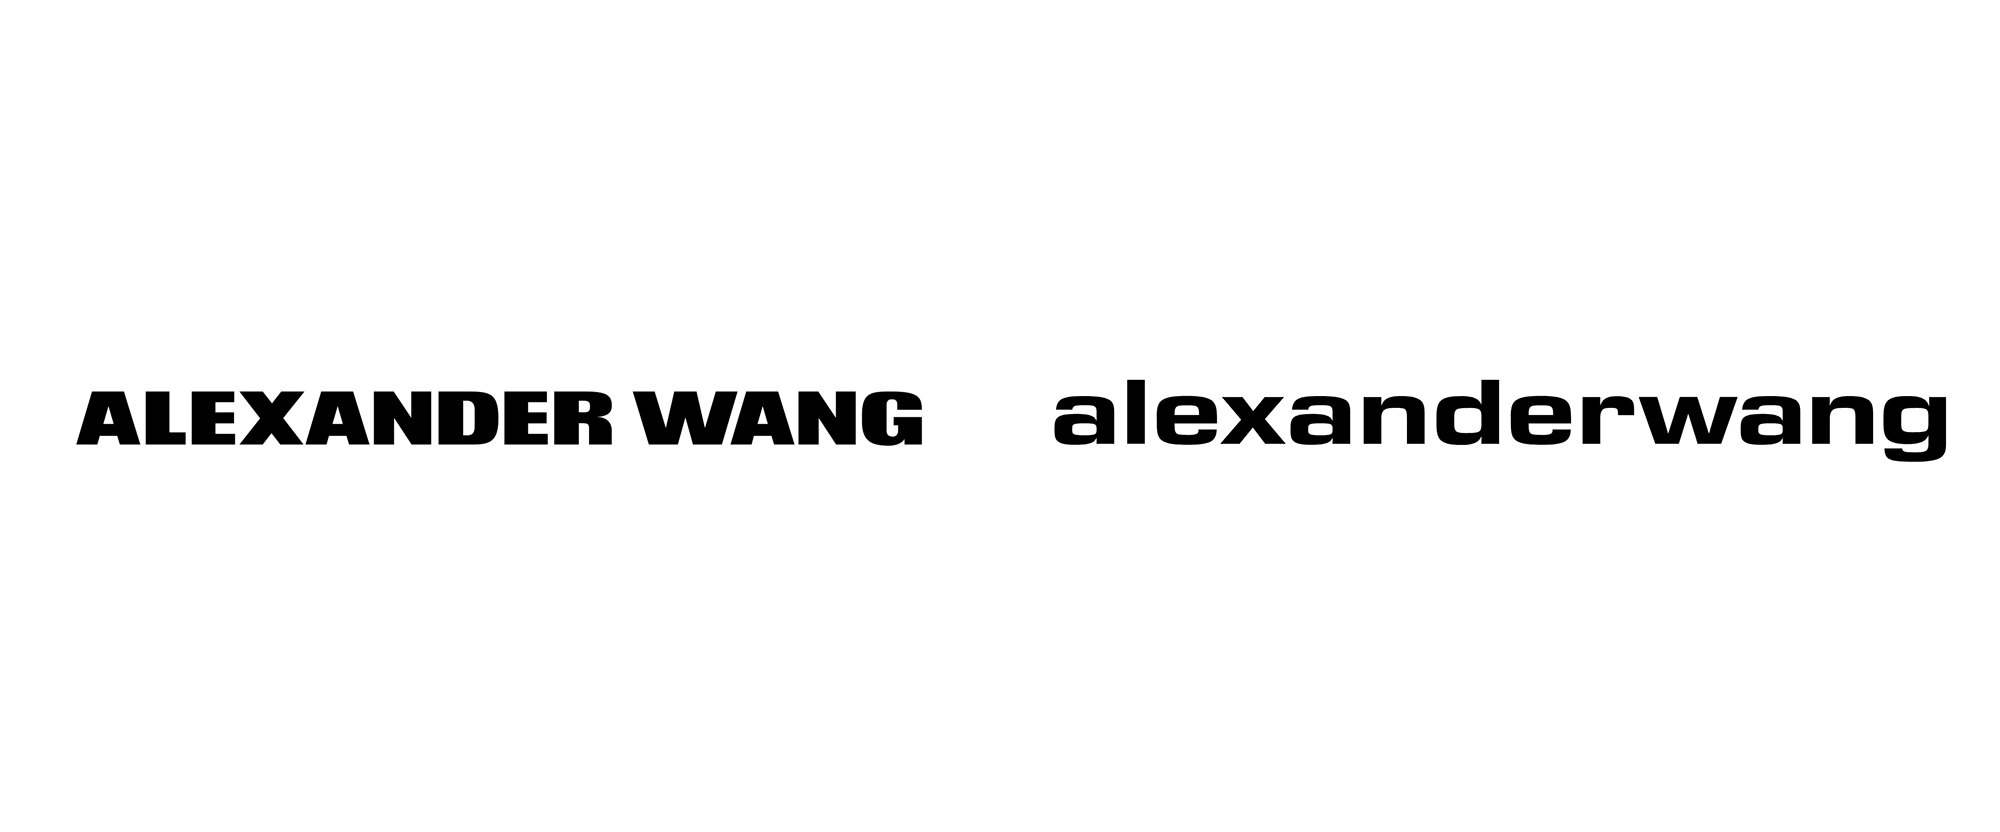 Alexander Logo - Brand New: New Logo for Alexander Wang